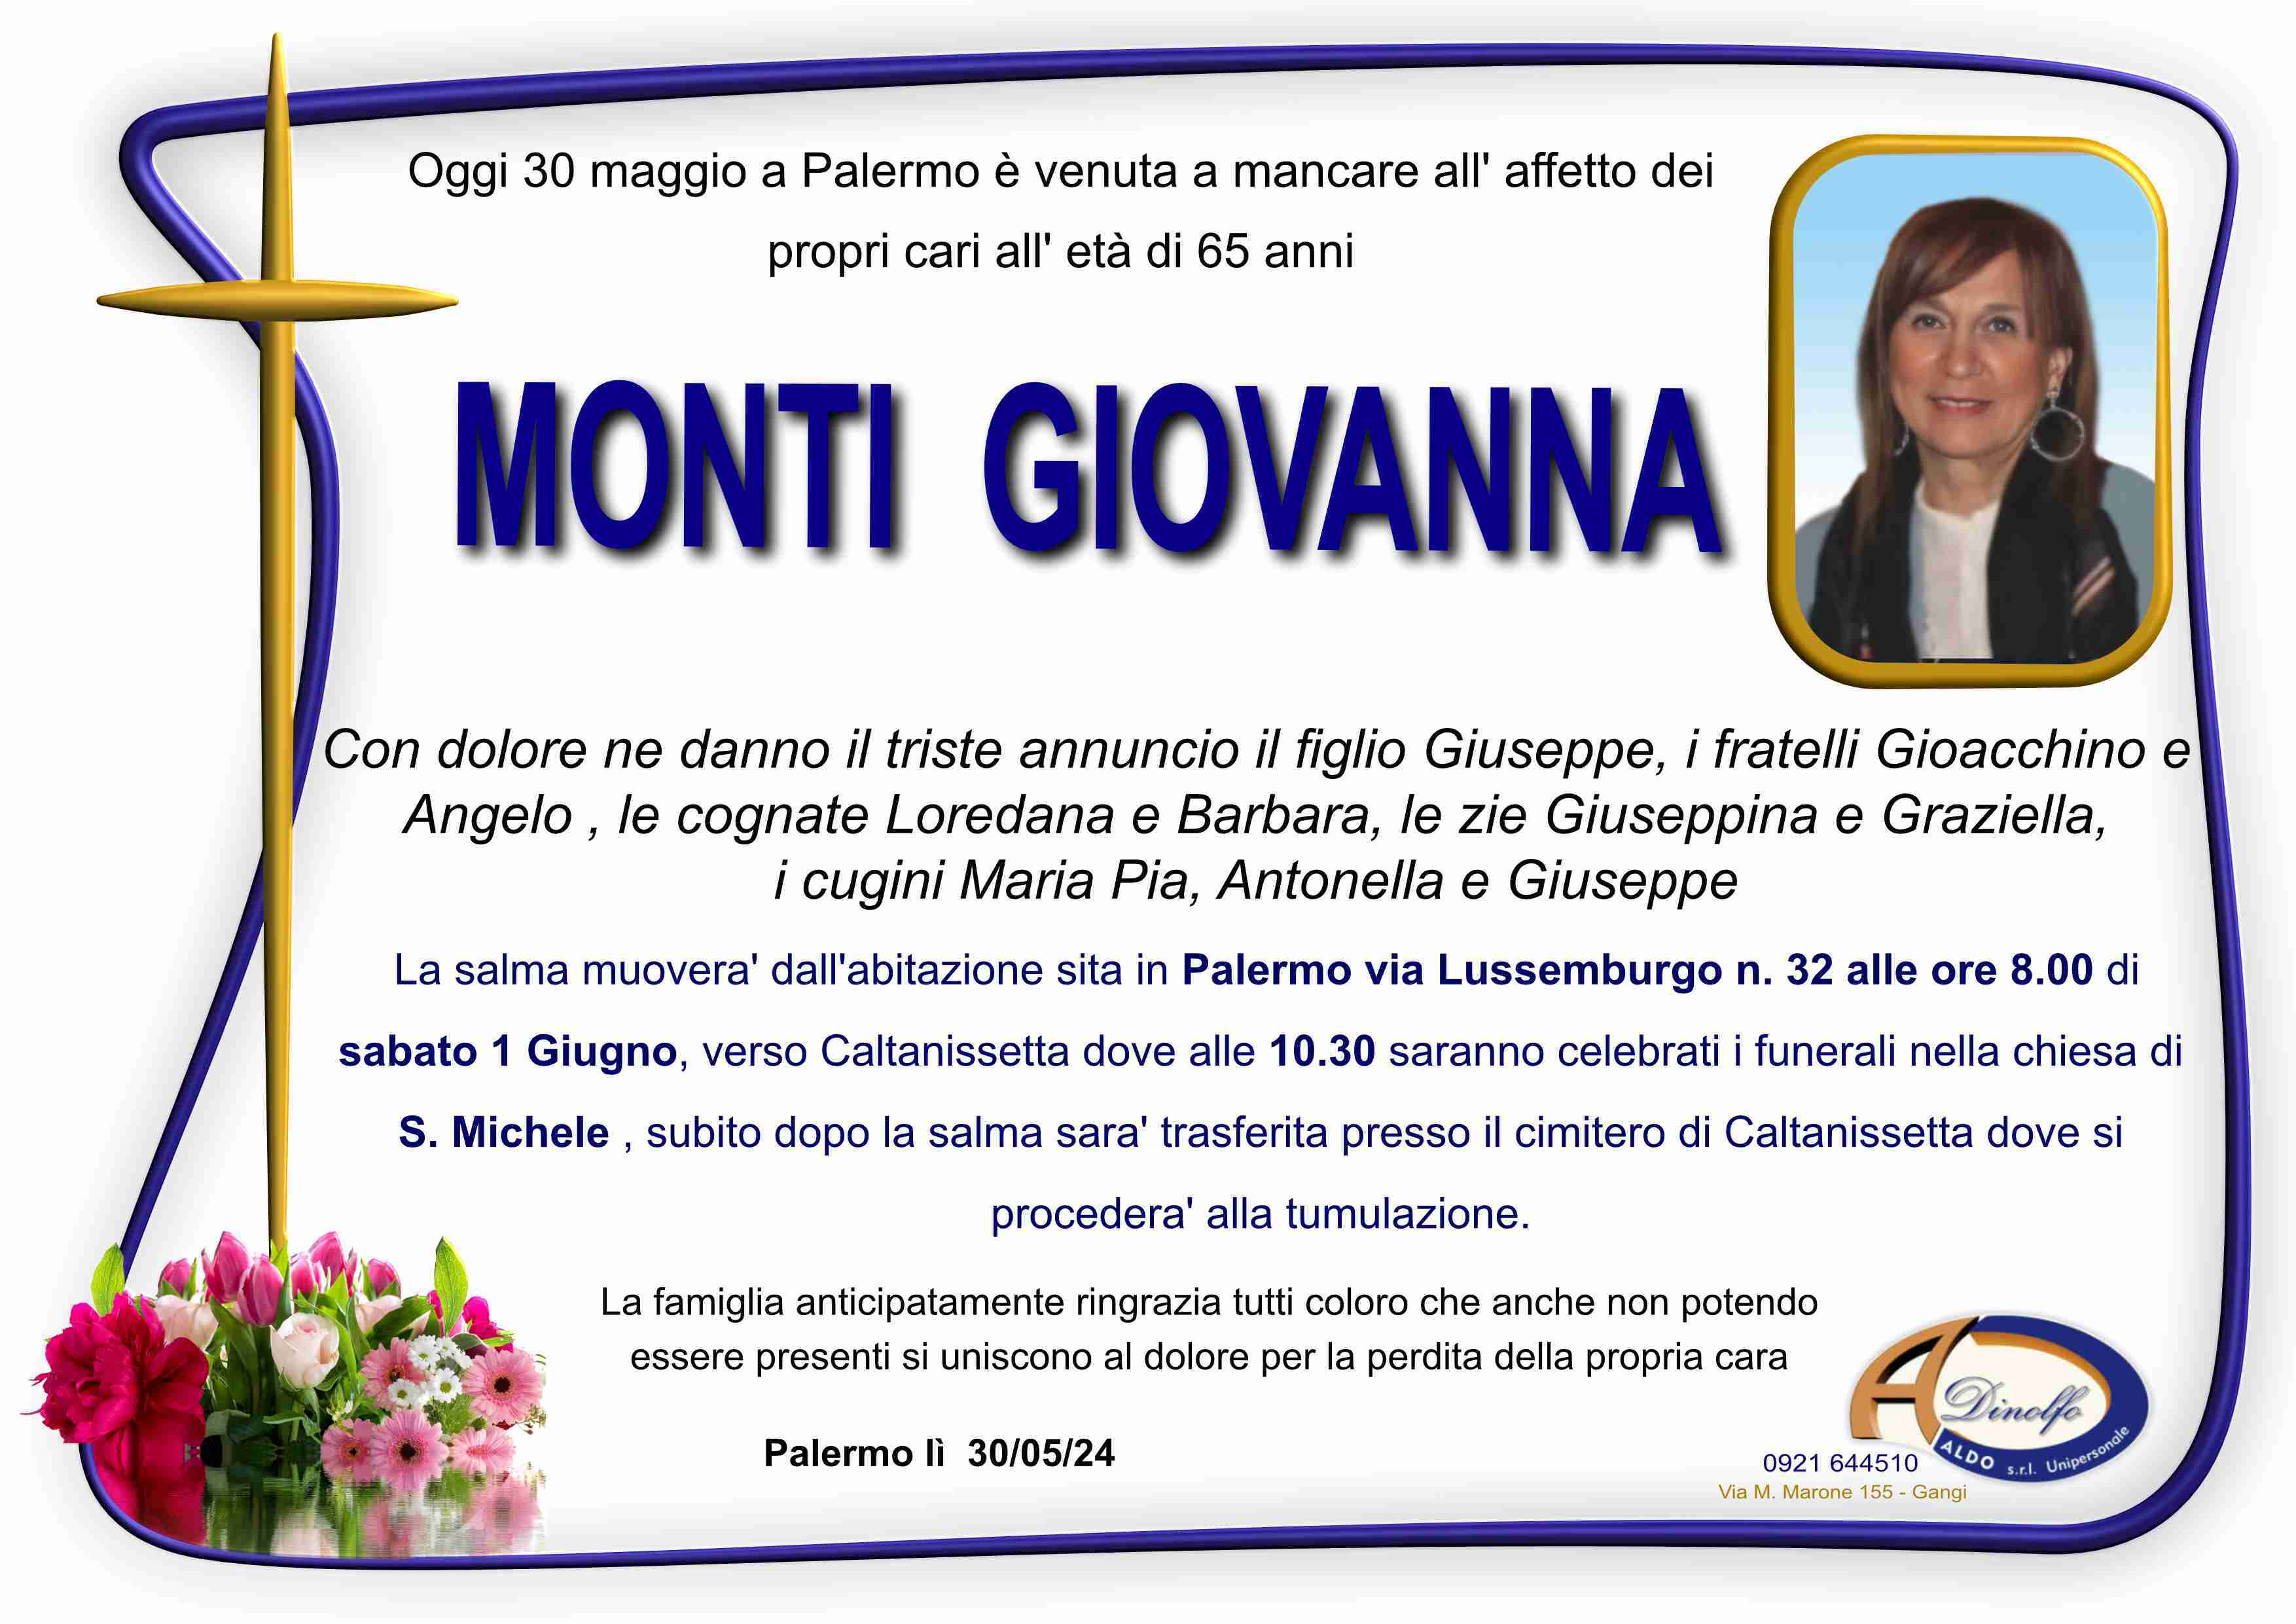 Giovanna Monti